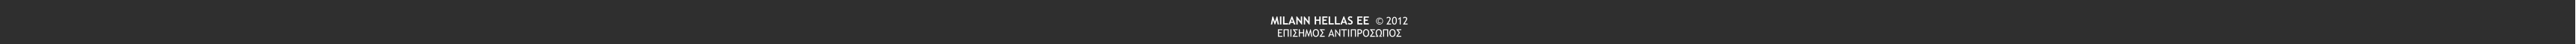 MILANN HELLAS ΕΕ  © 2012  ΕΠΙΣΗΜΟΣ ΑΝΤΙΠΡΟΣΩΠΟΣ